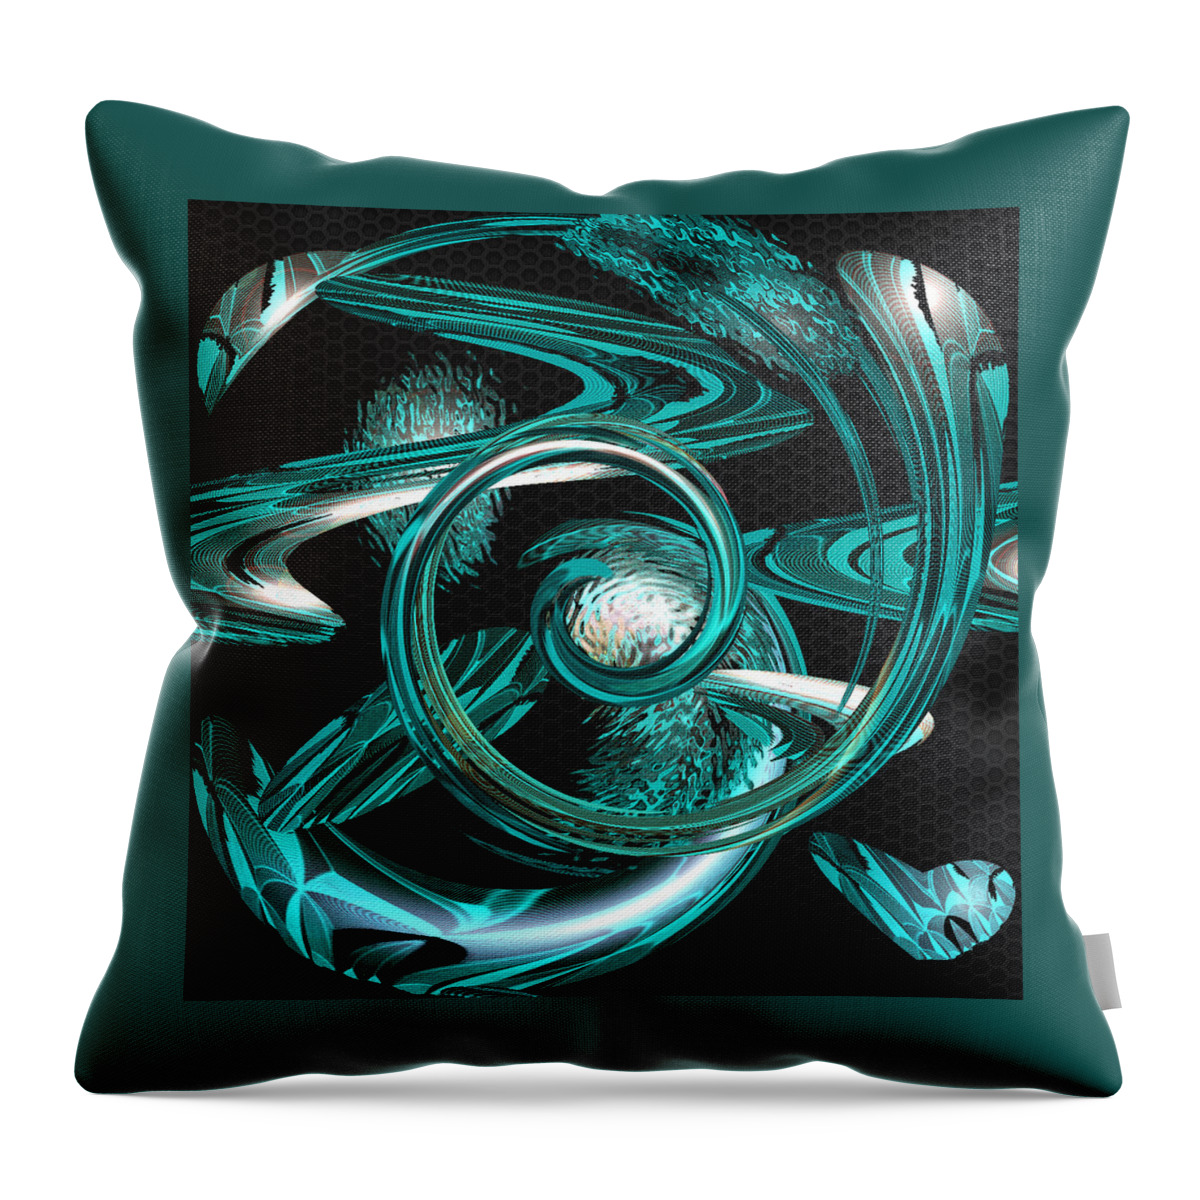 Digital Wall Art Throw Pillow featuring the digital art Snakes Swirl Black by Ronald Mills